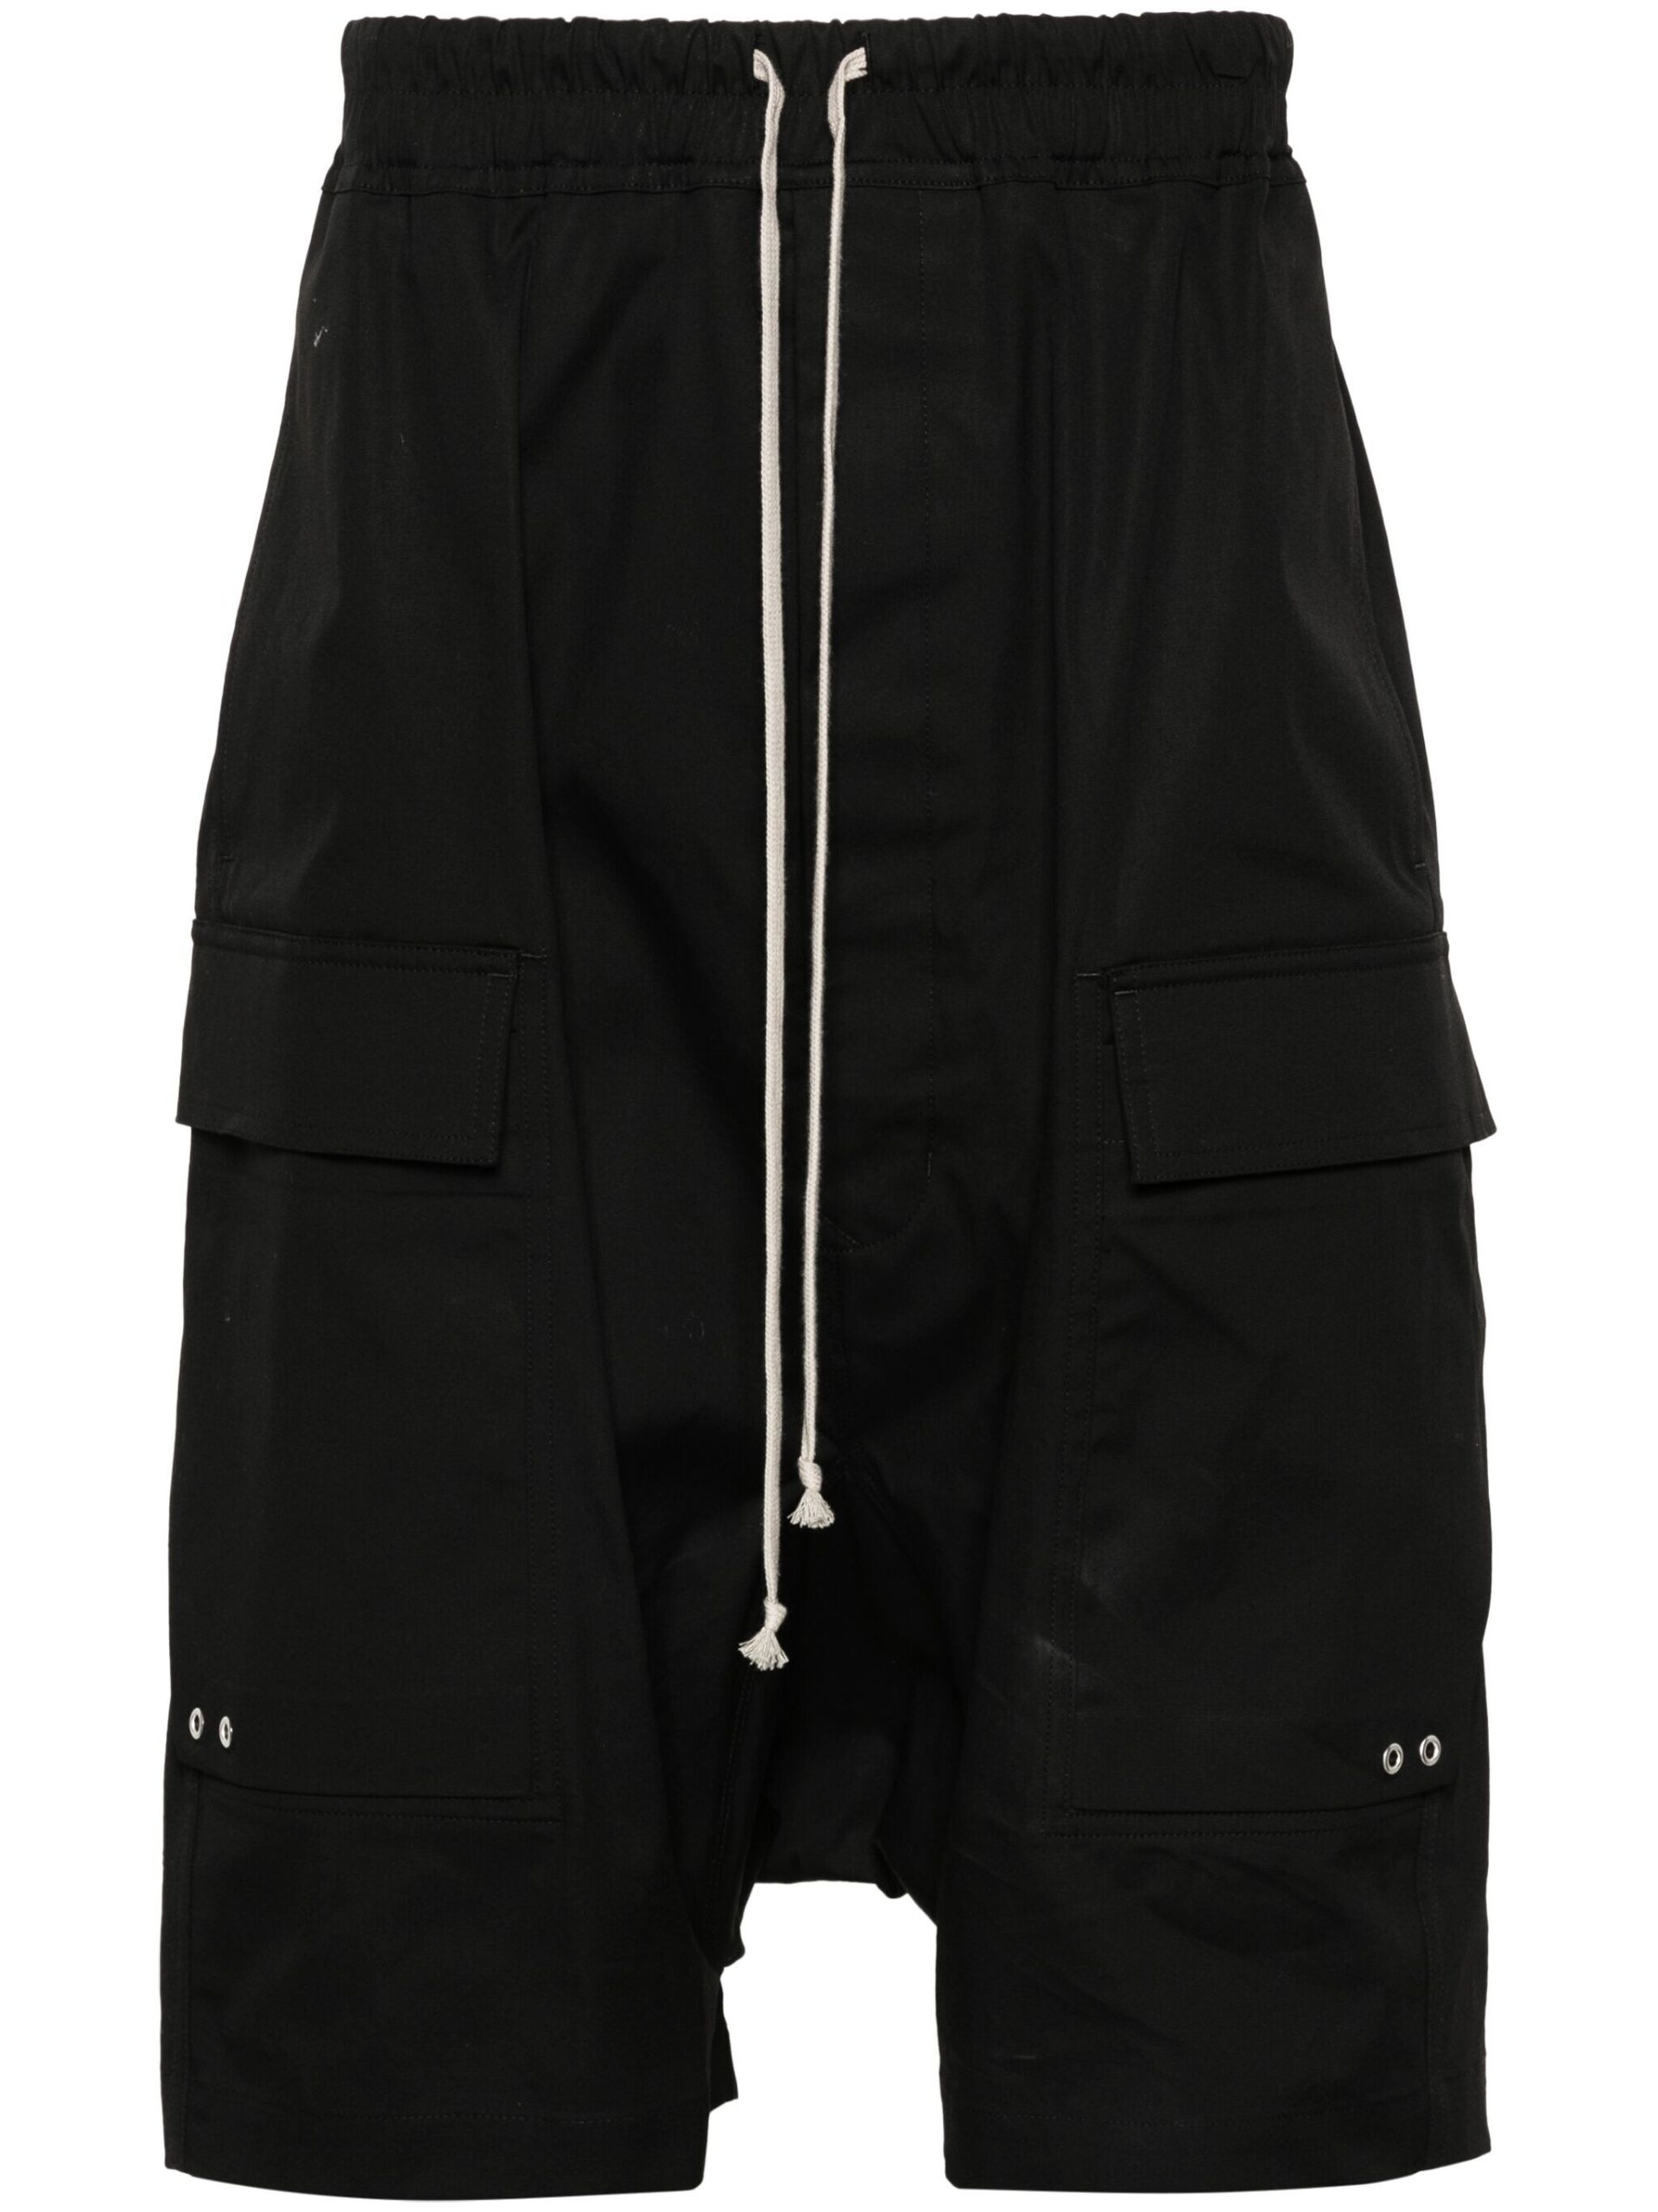 Black Drop Crotch Organic Cotton Shorts - 1